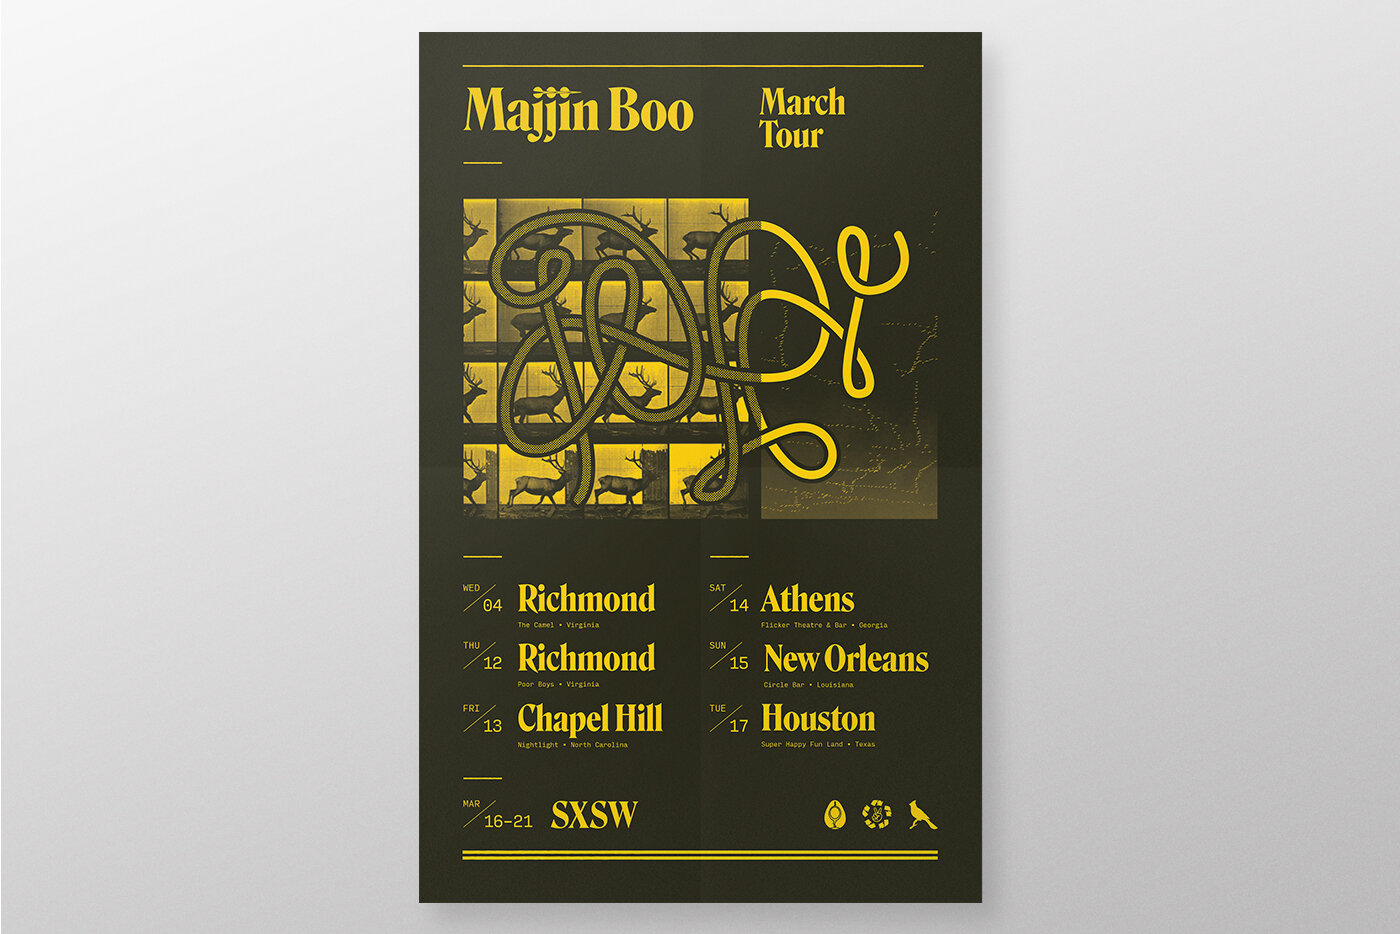 Majjin Boo SXSW Tour Poster Design